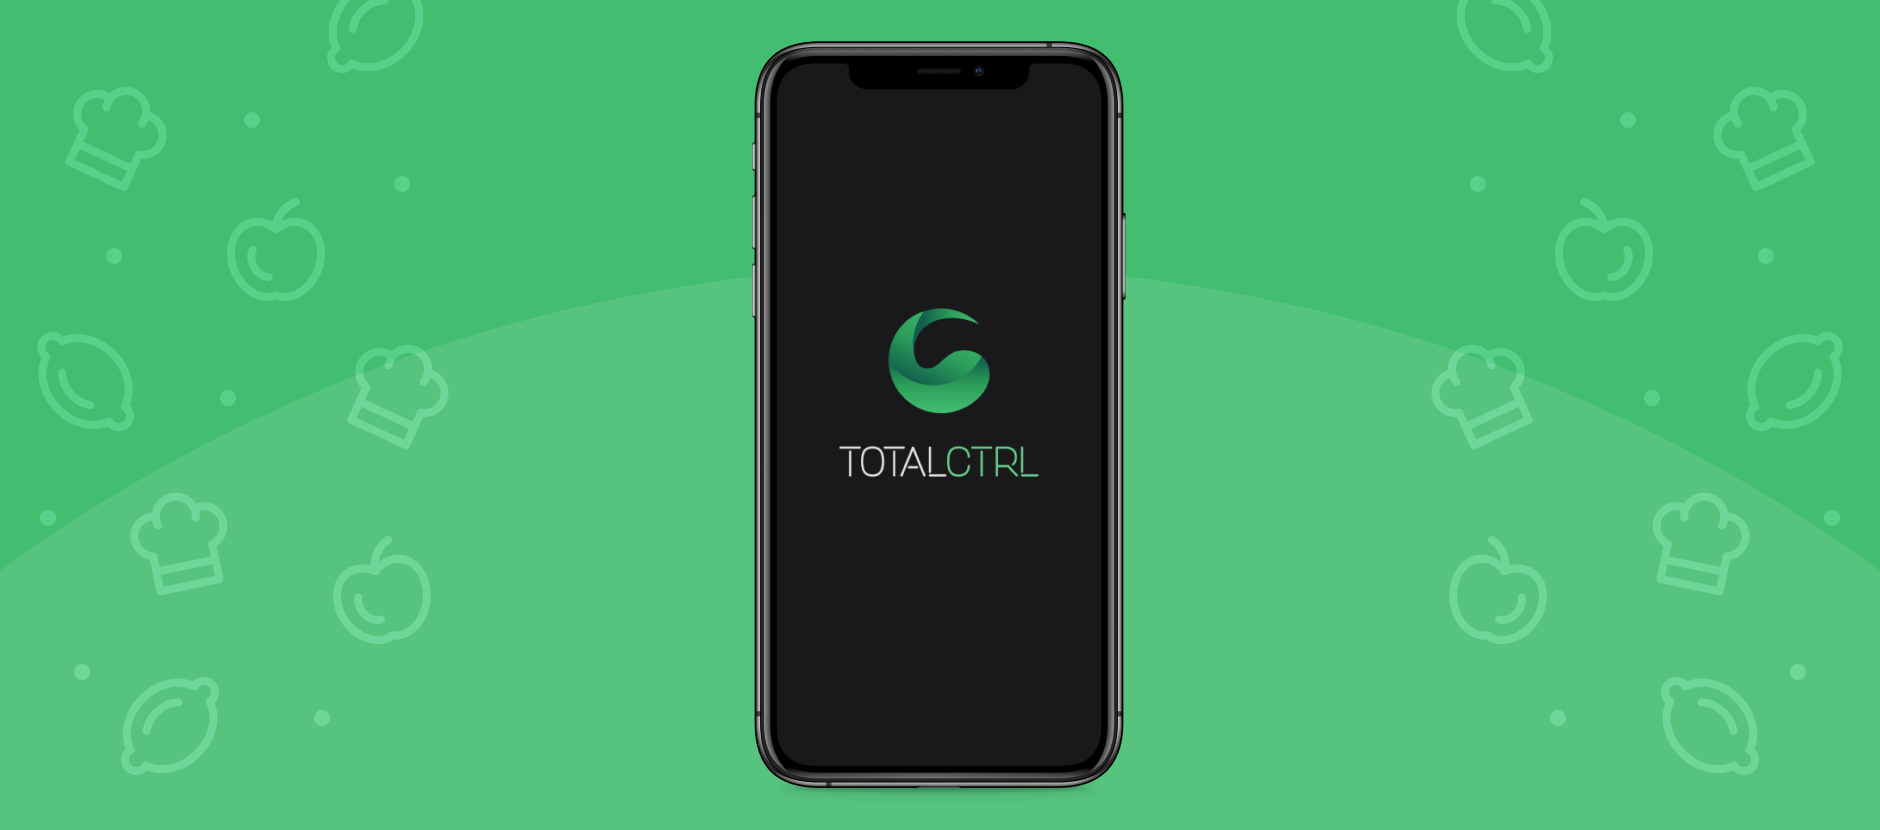 TotalCtrl mobile app